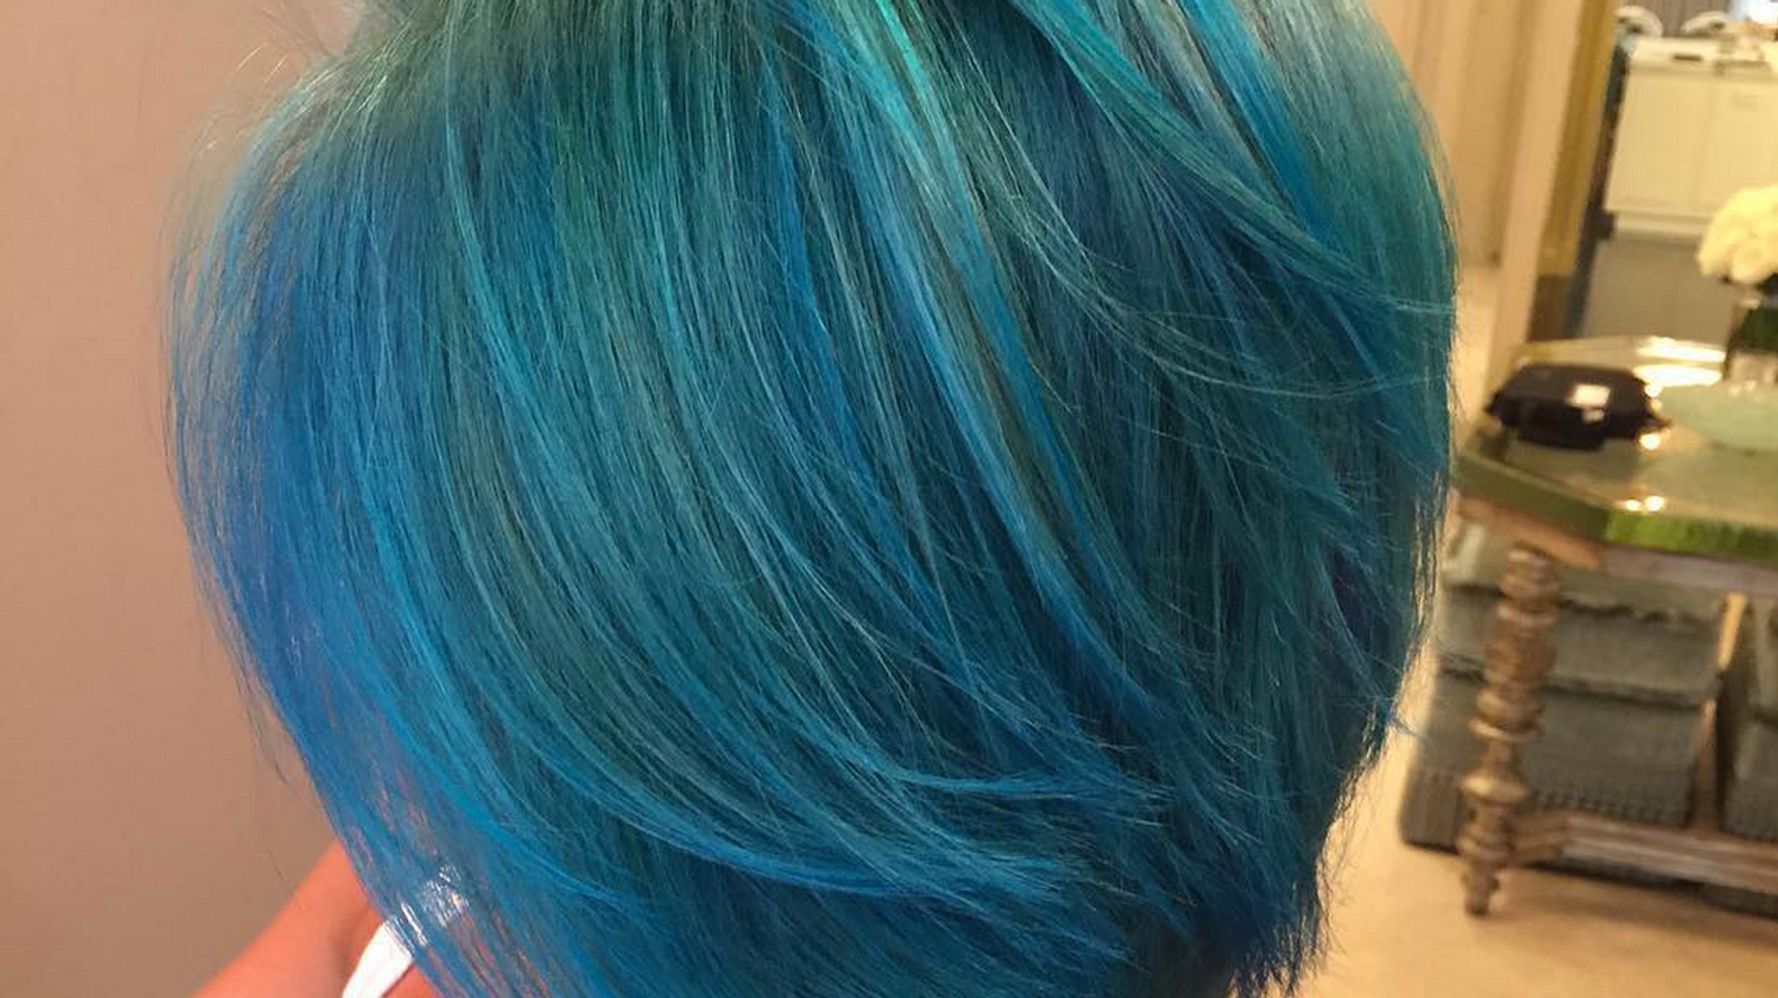 1. "Blue Hair" Instagram Filter by @mariannayurkiewicz - wide 4